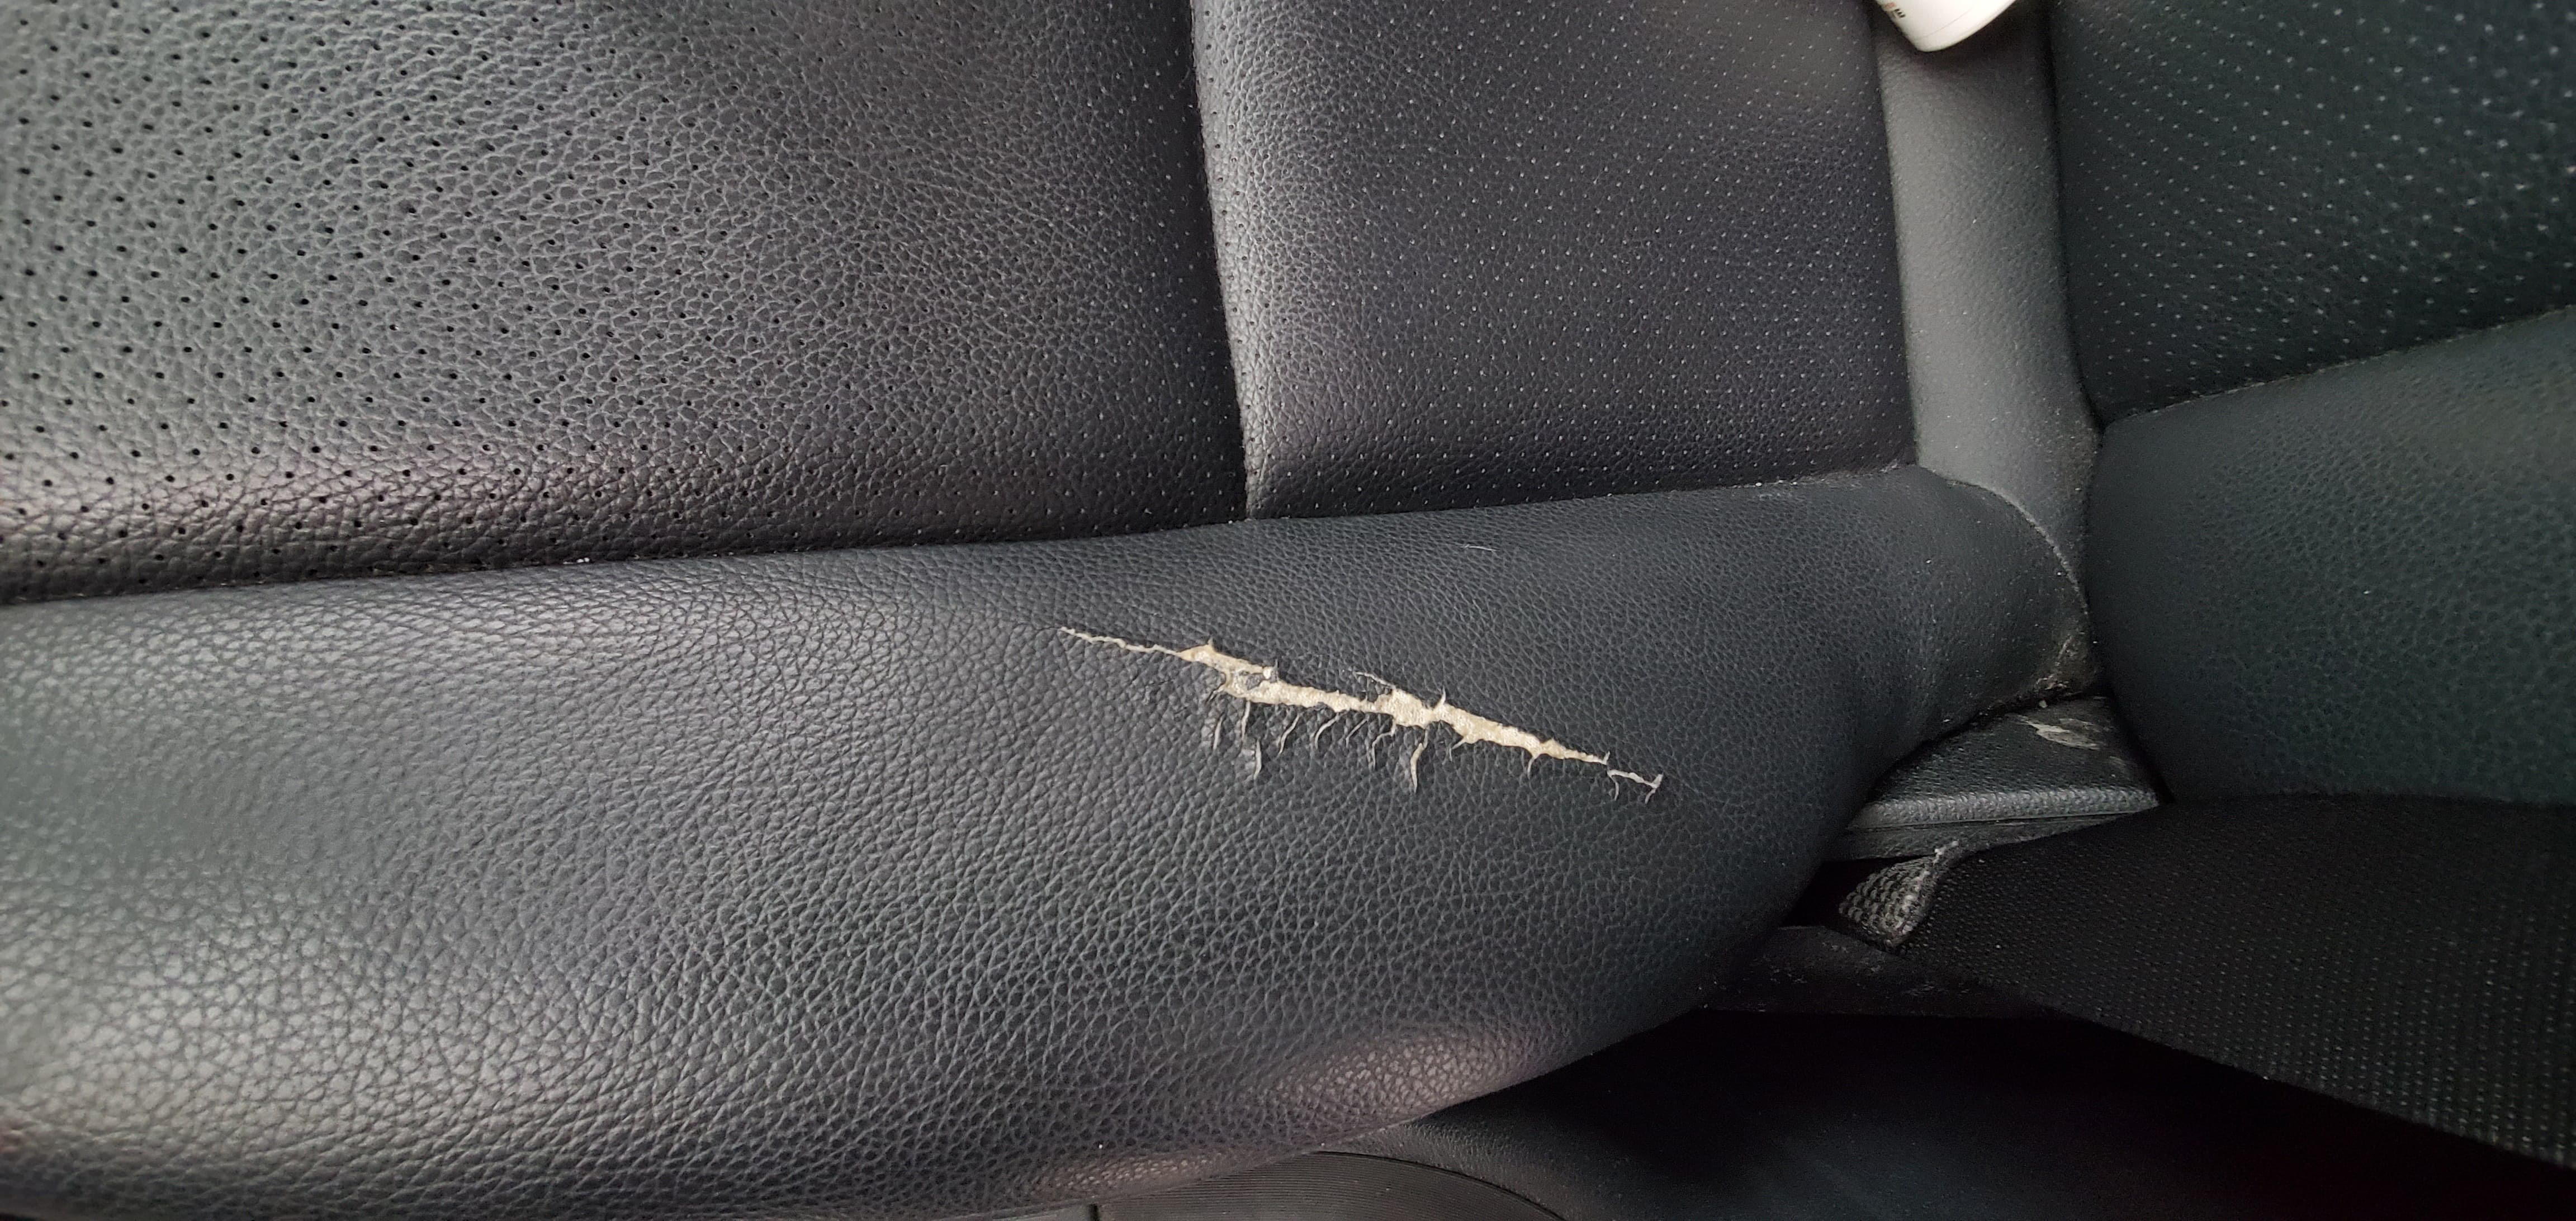 How To Repair A Leather Car Seat - How To Repair Rip In Vinyl Car Seat